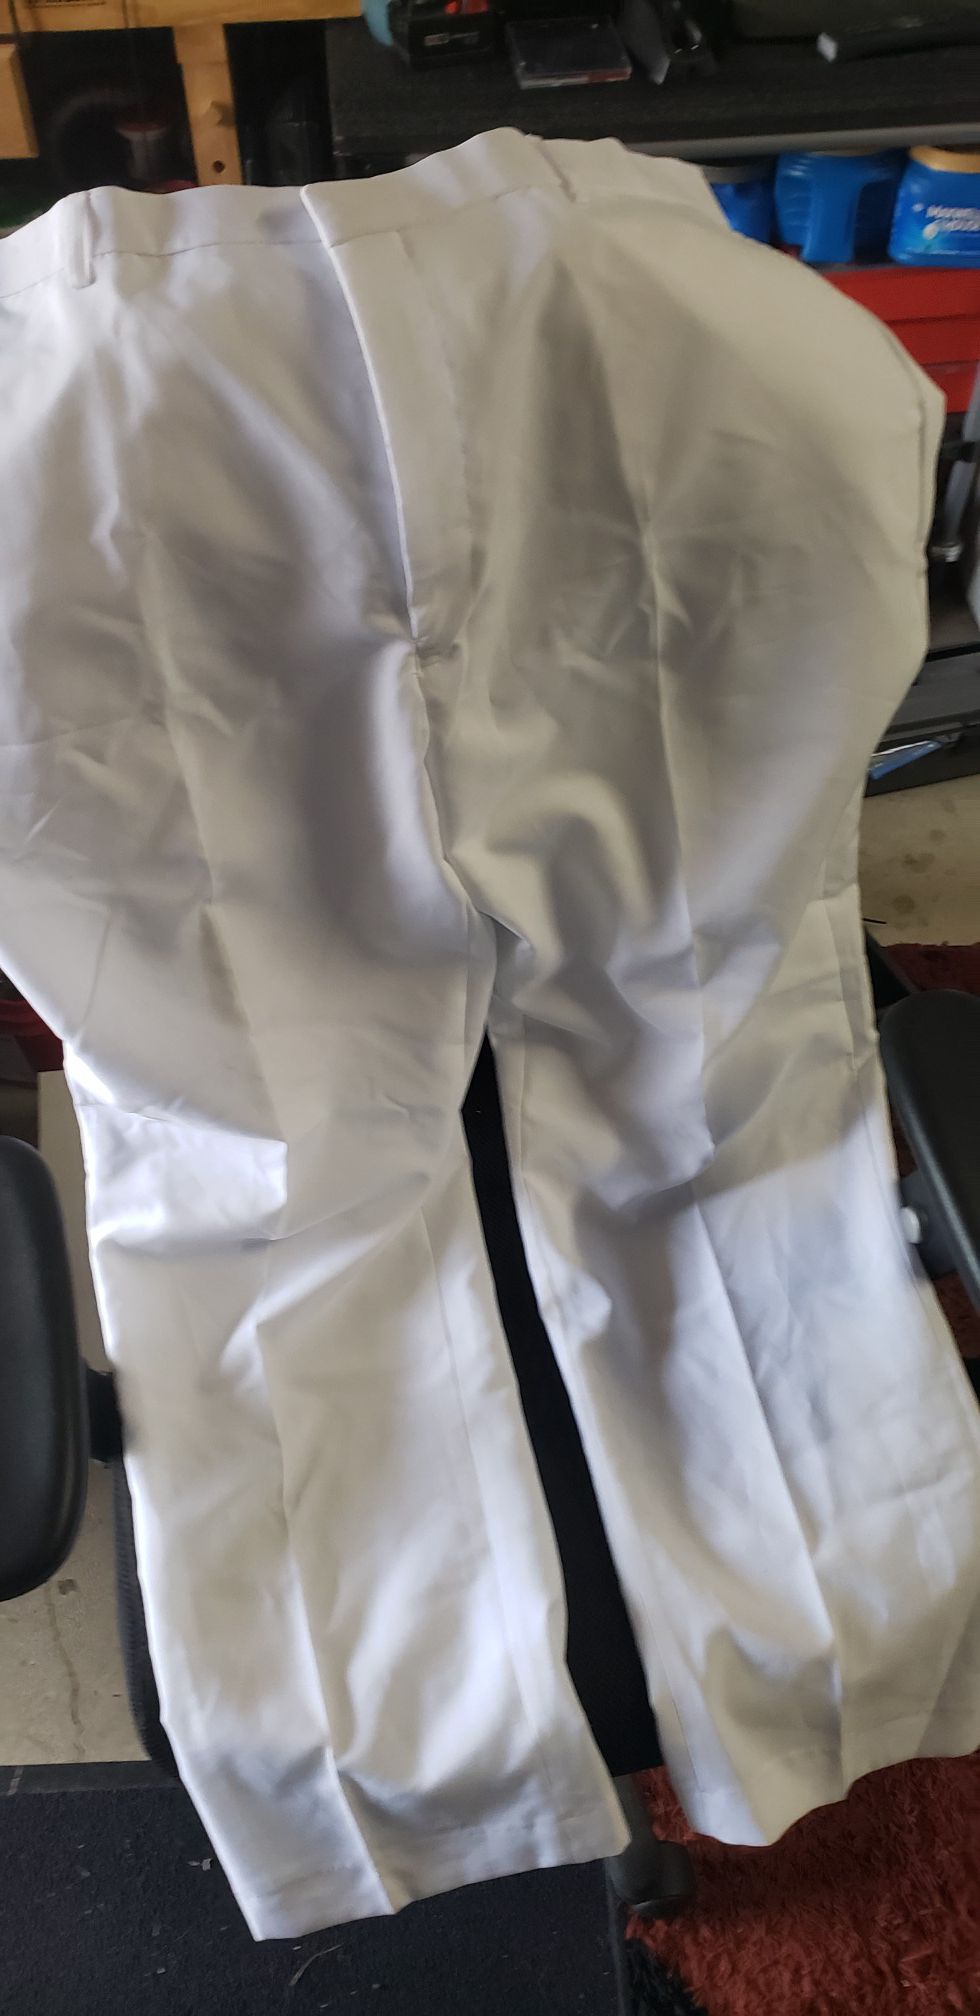 Free white dress type pants